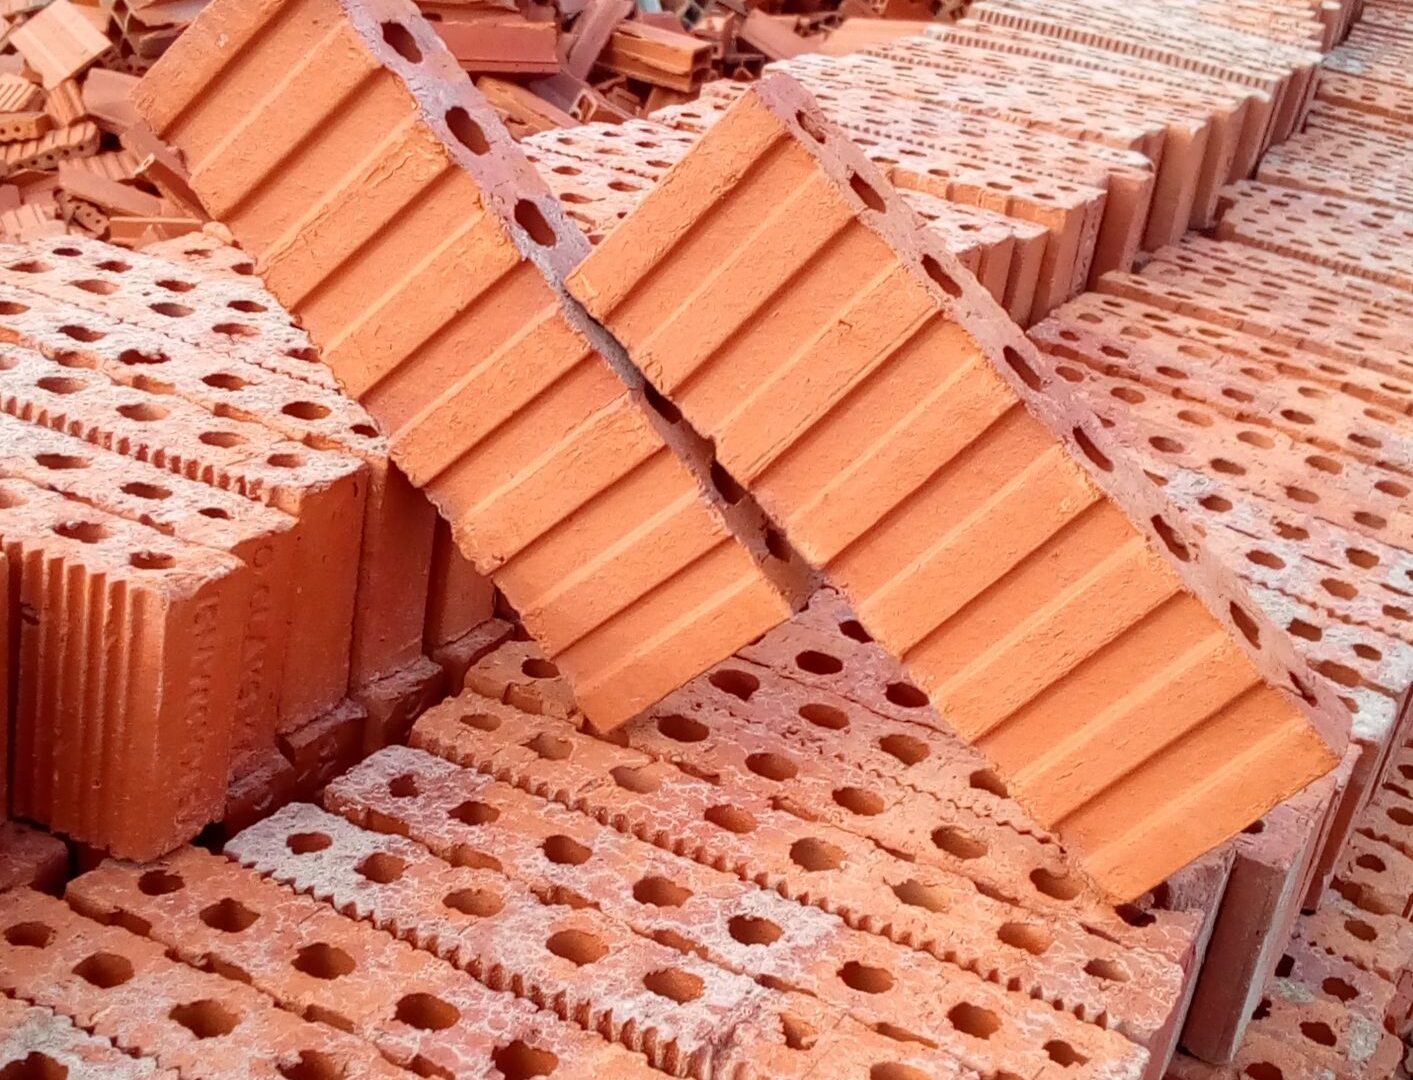 Half Bricks